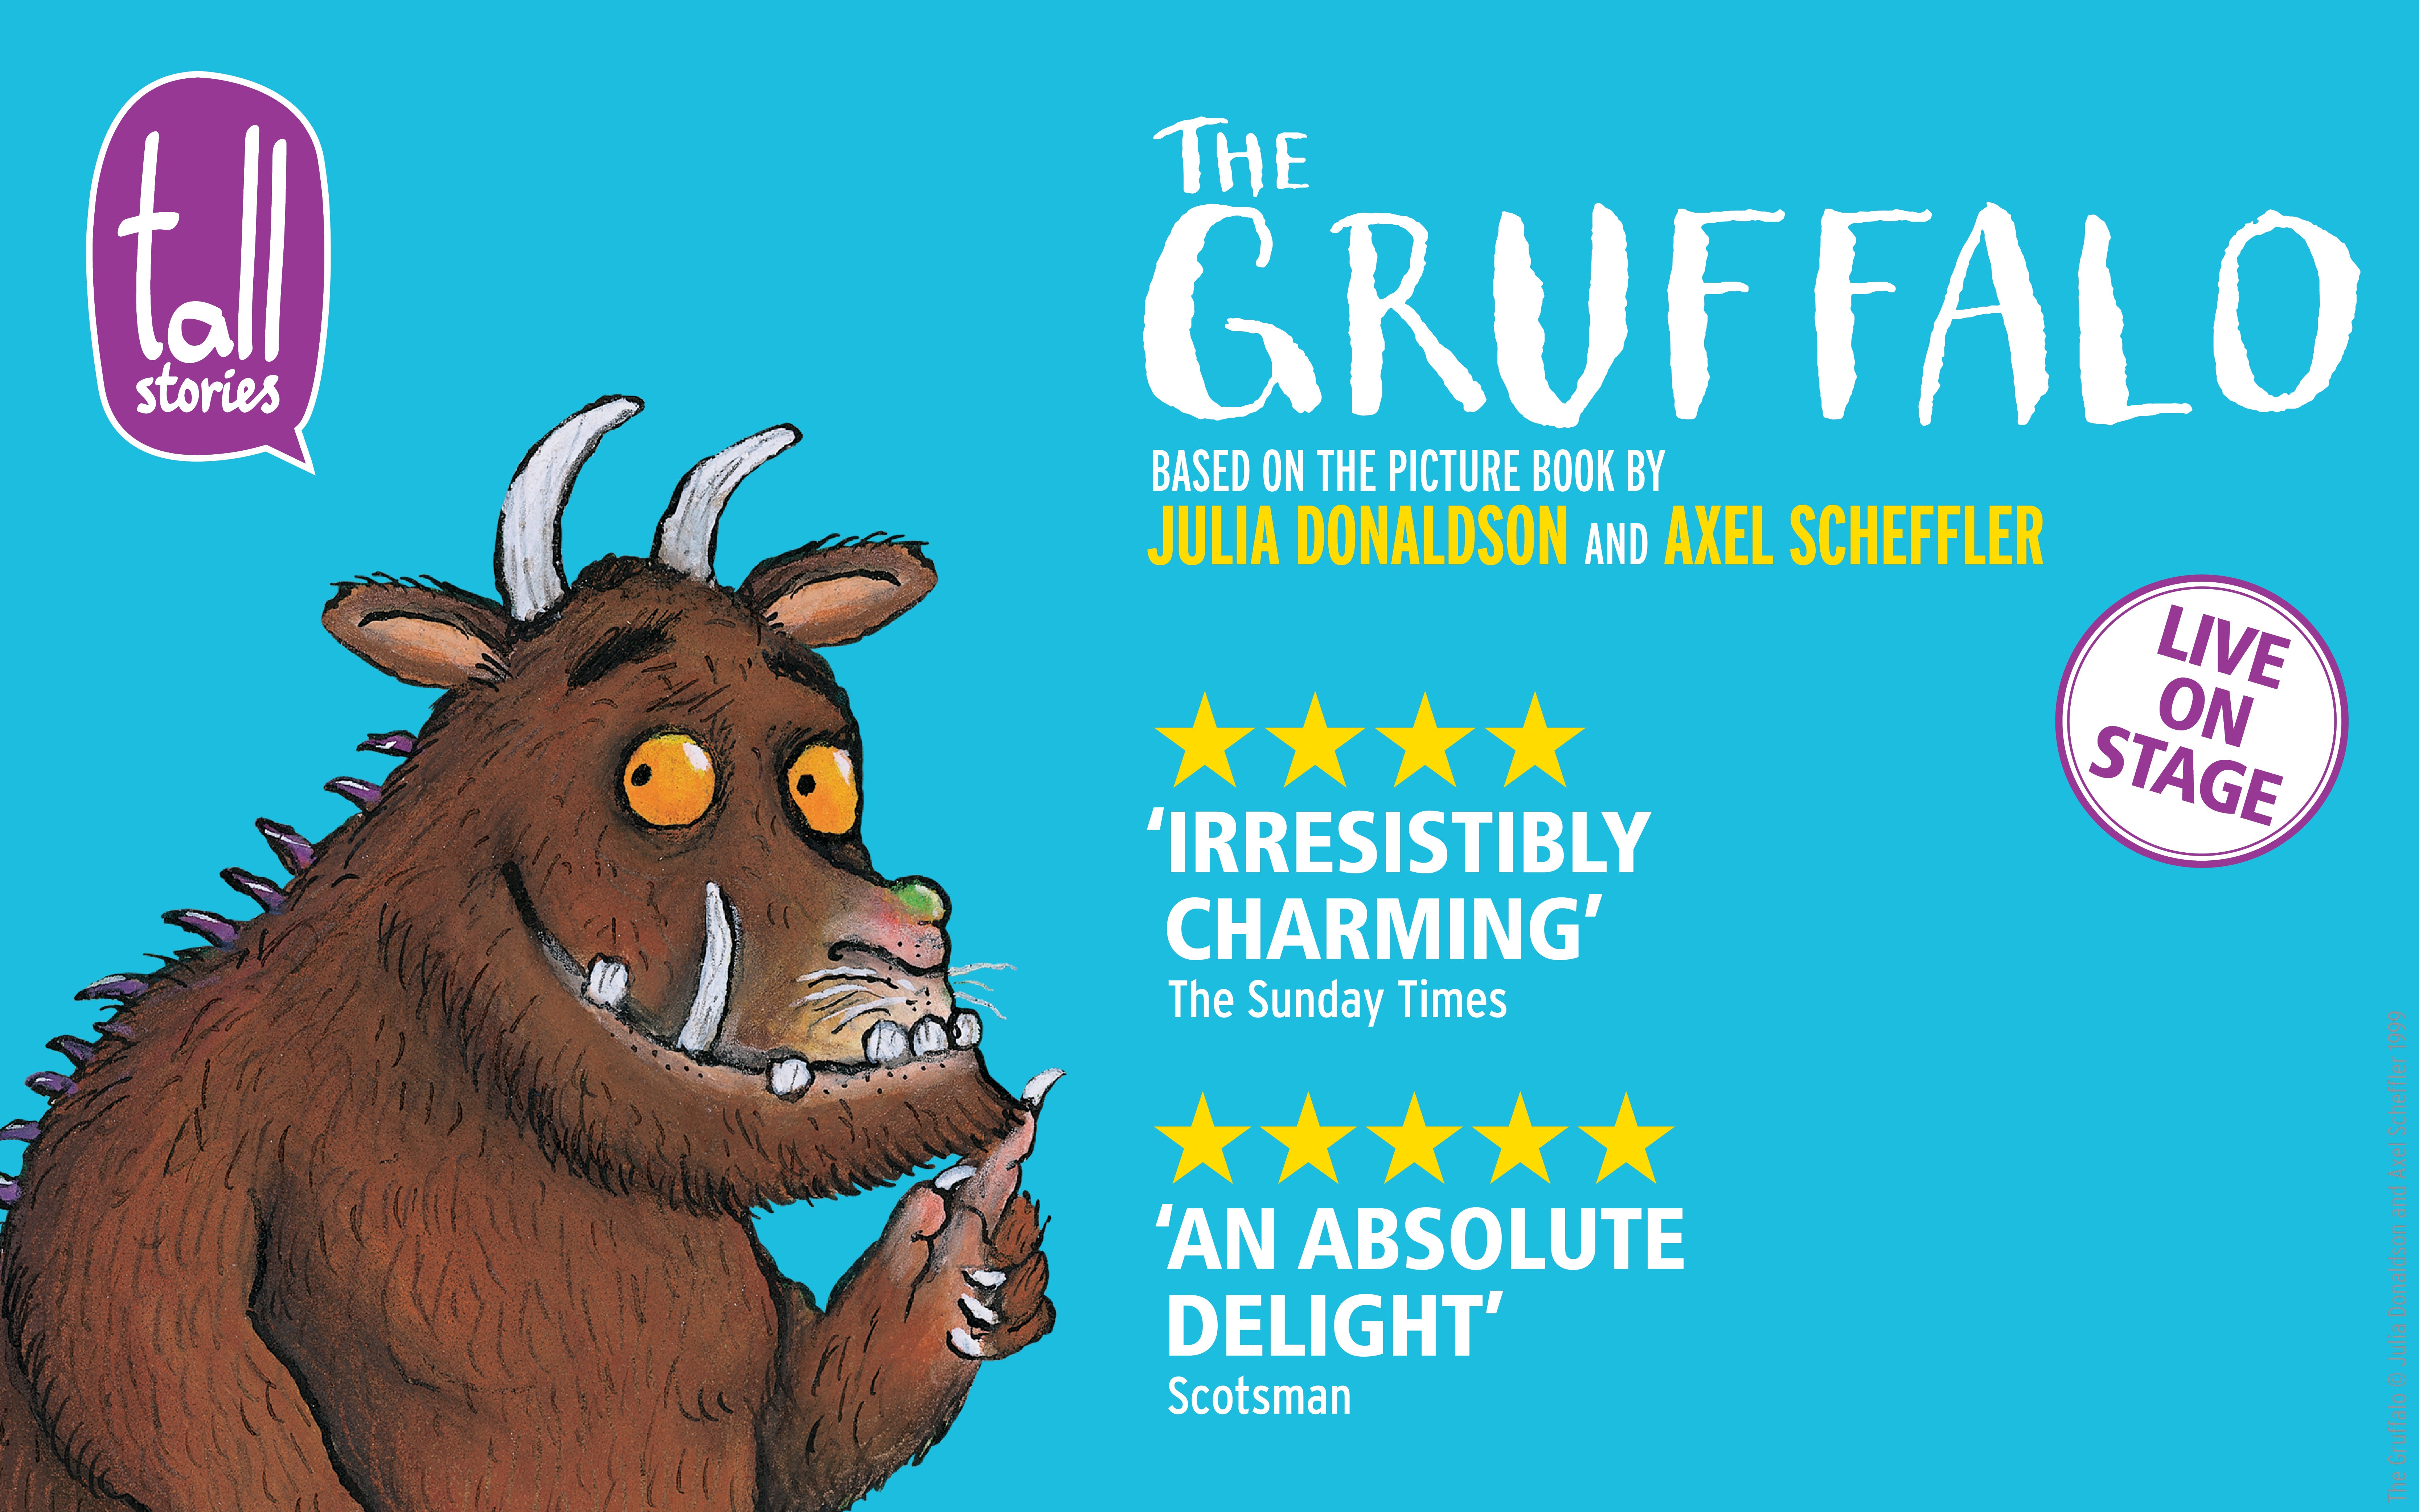 A poster of The Gruffalo UK Tour